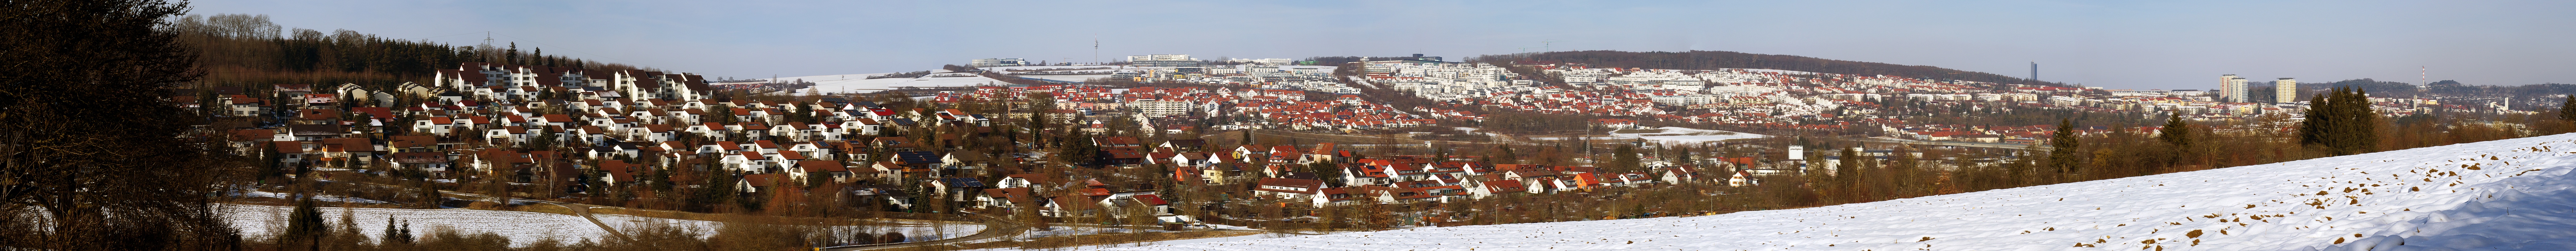 Winterpanorama Eselsberg Ulm